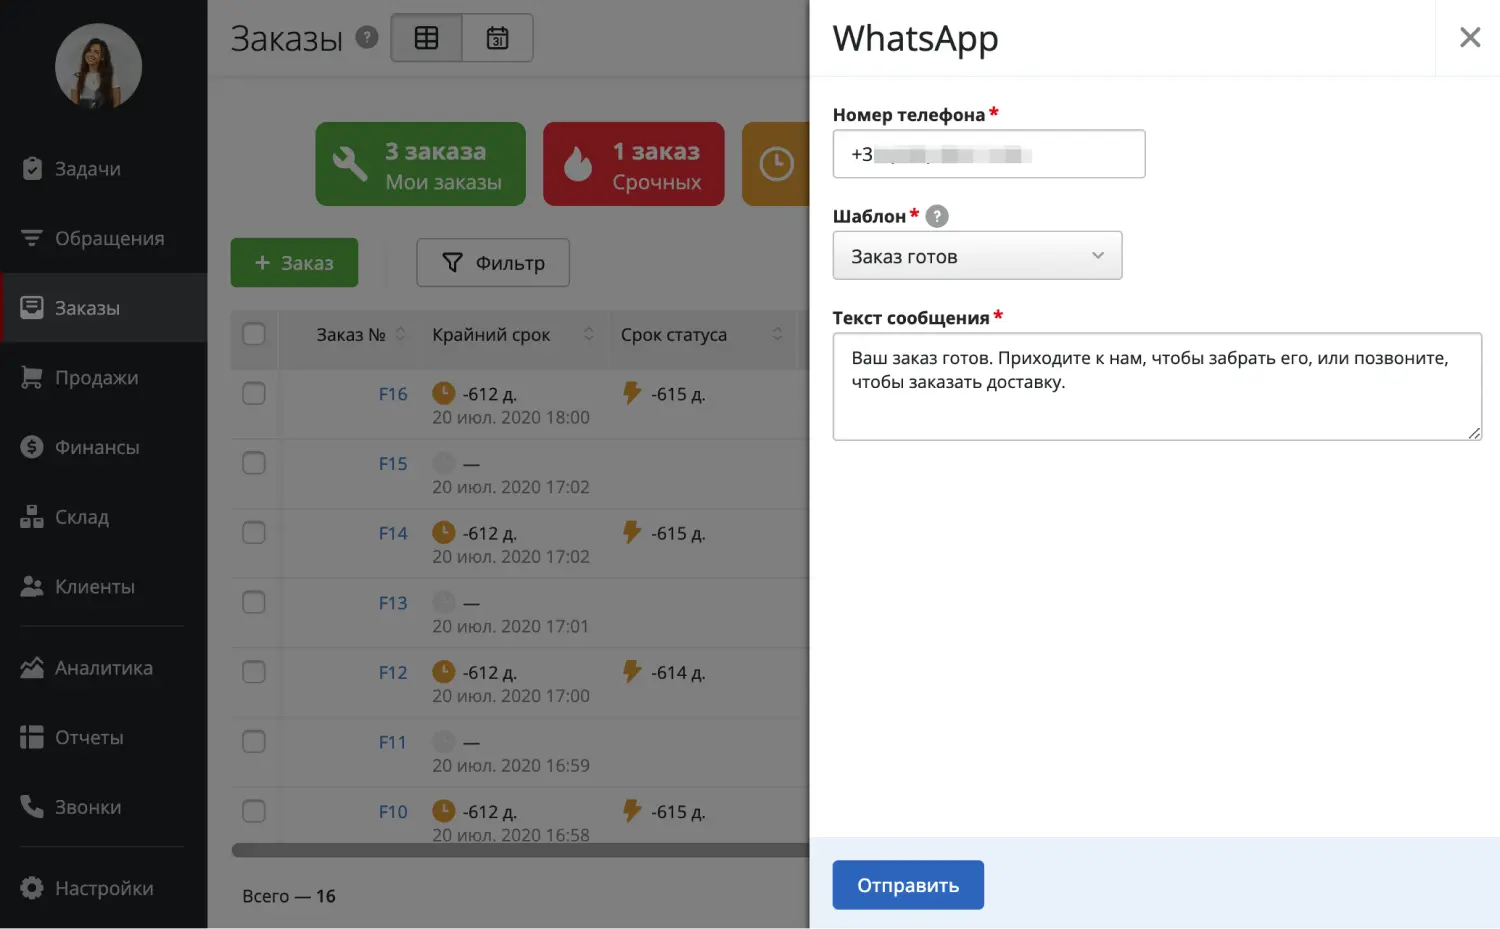 whatsapp-dialogue-ru.png (63 KB)